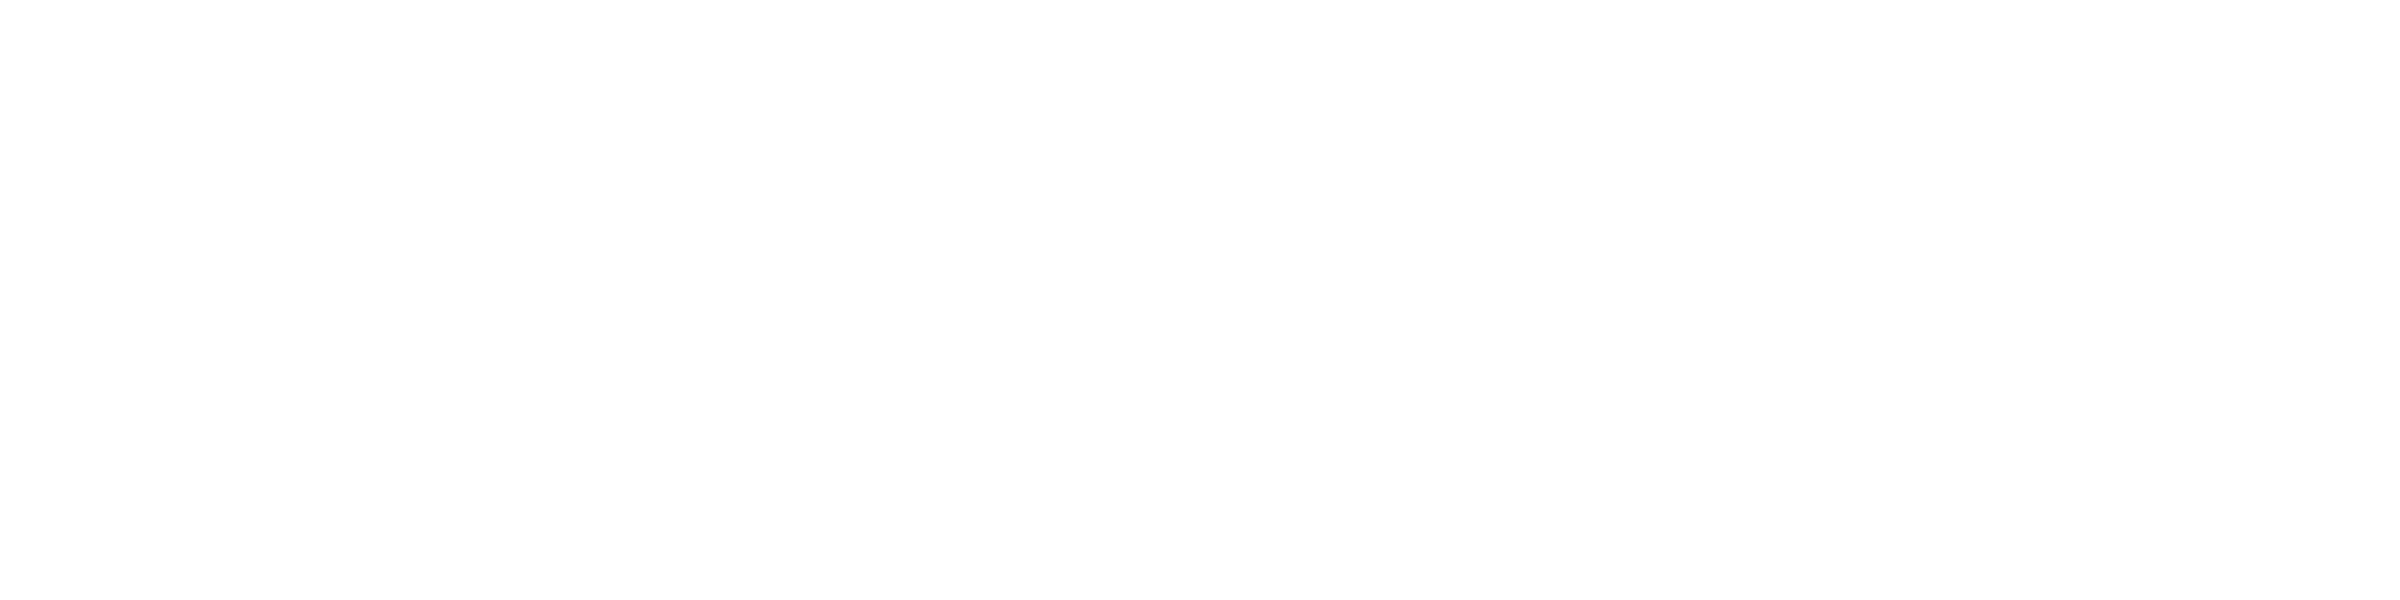 Arevalo Home Partnership